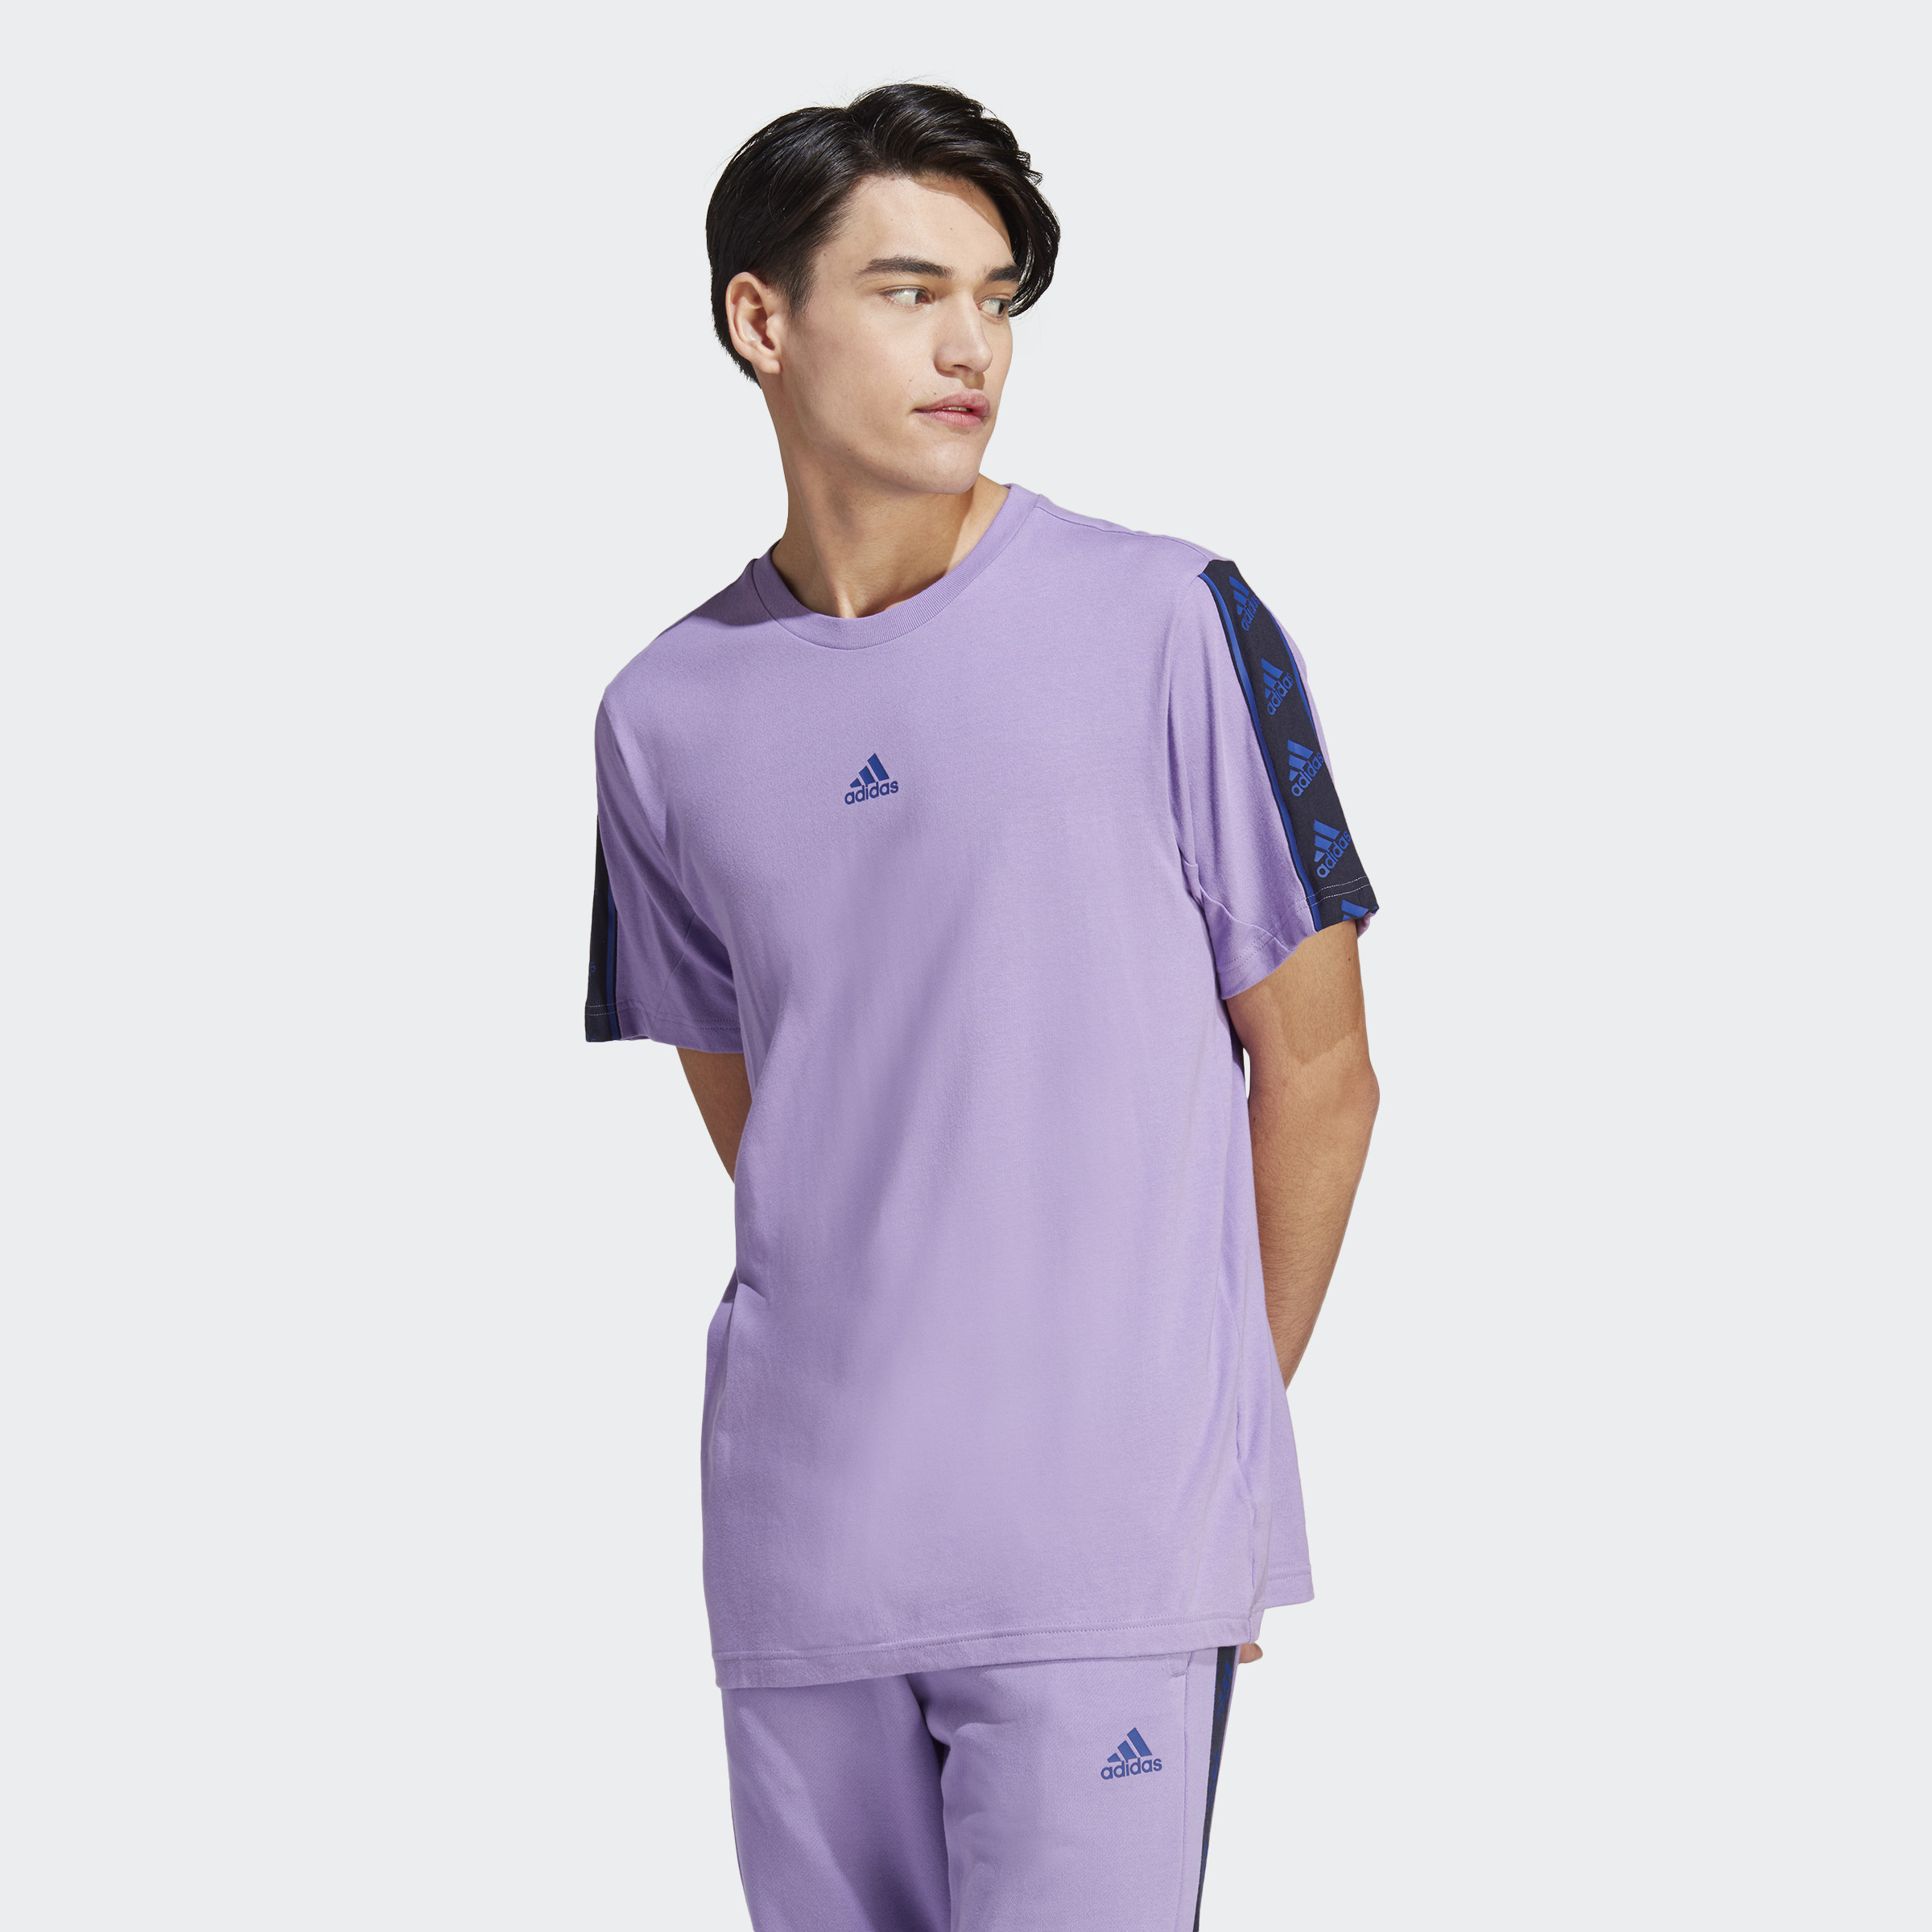 yeezy butters legit check on - adidas Performance Men's - Shirt Purple IC6805